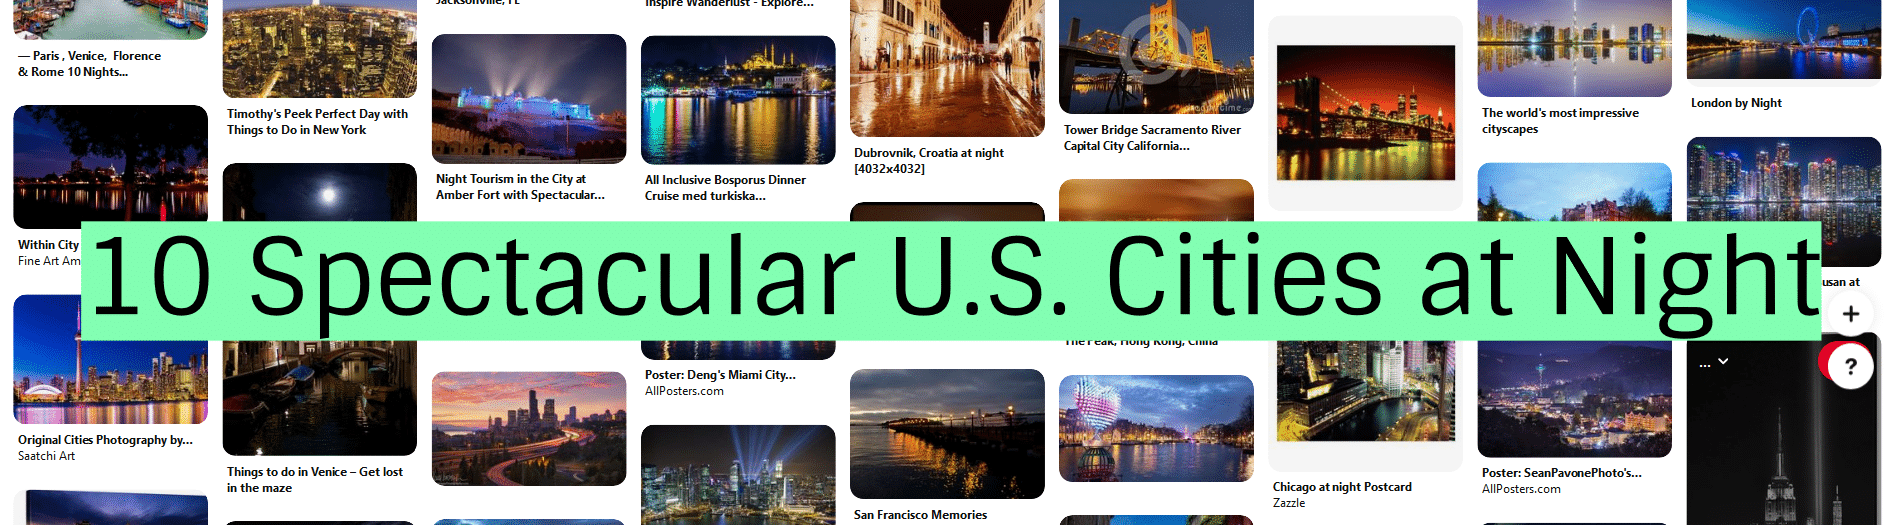 10 Spectacular U.S. Cities at Night